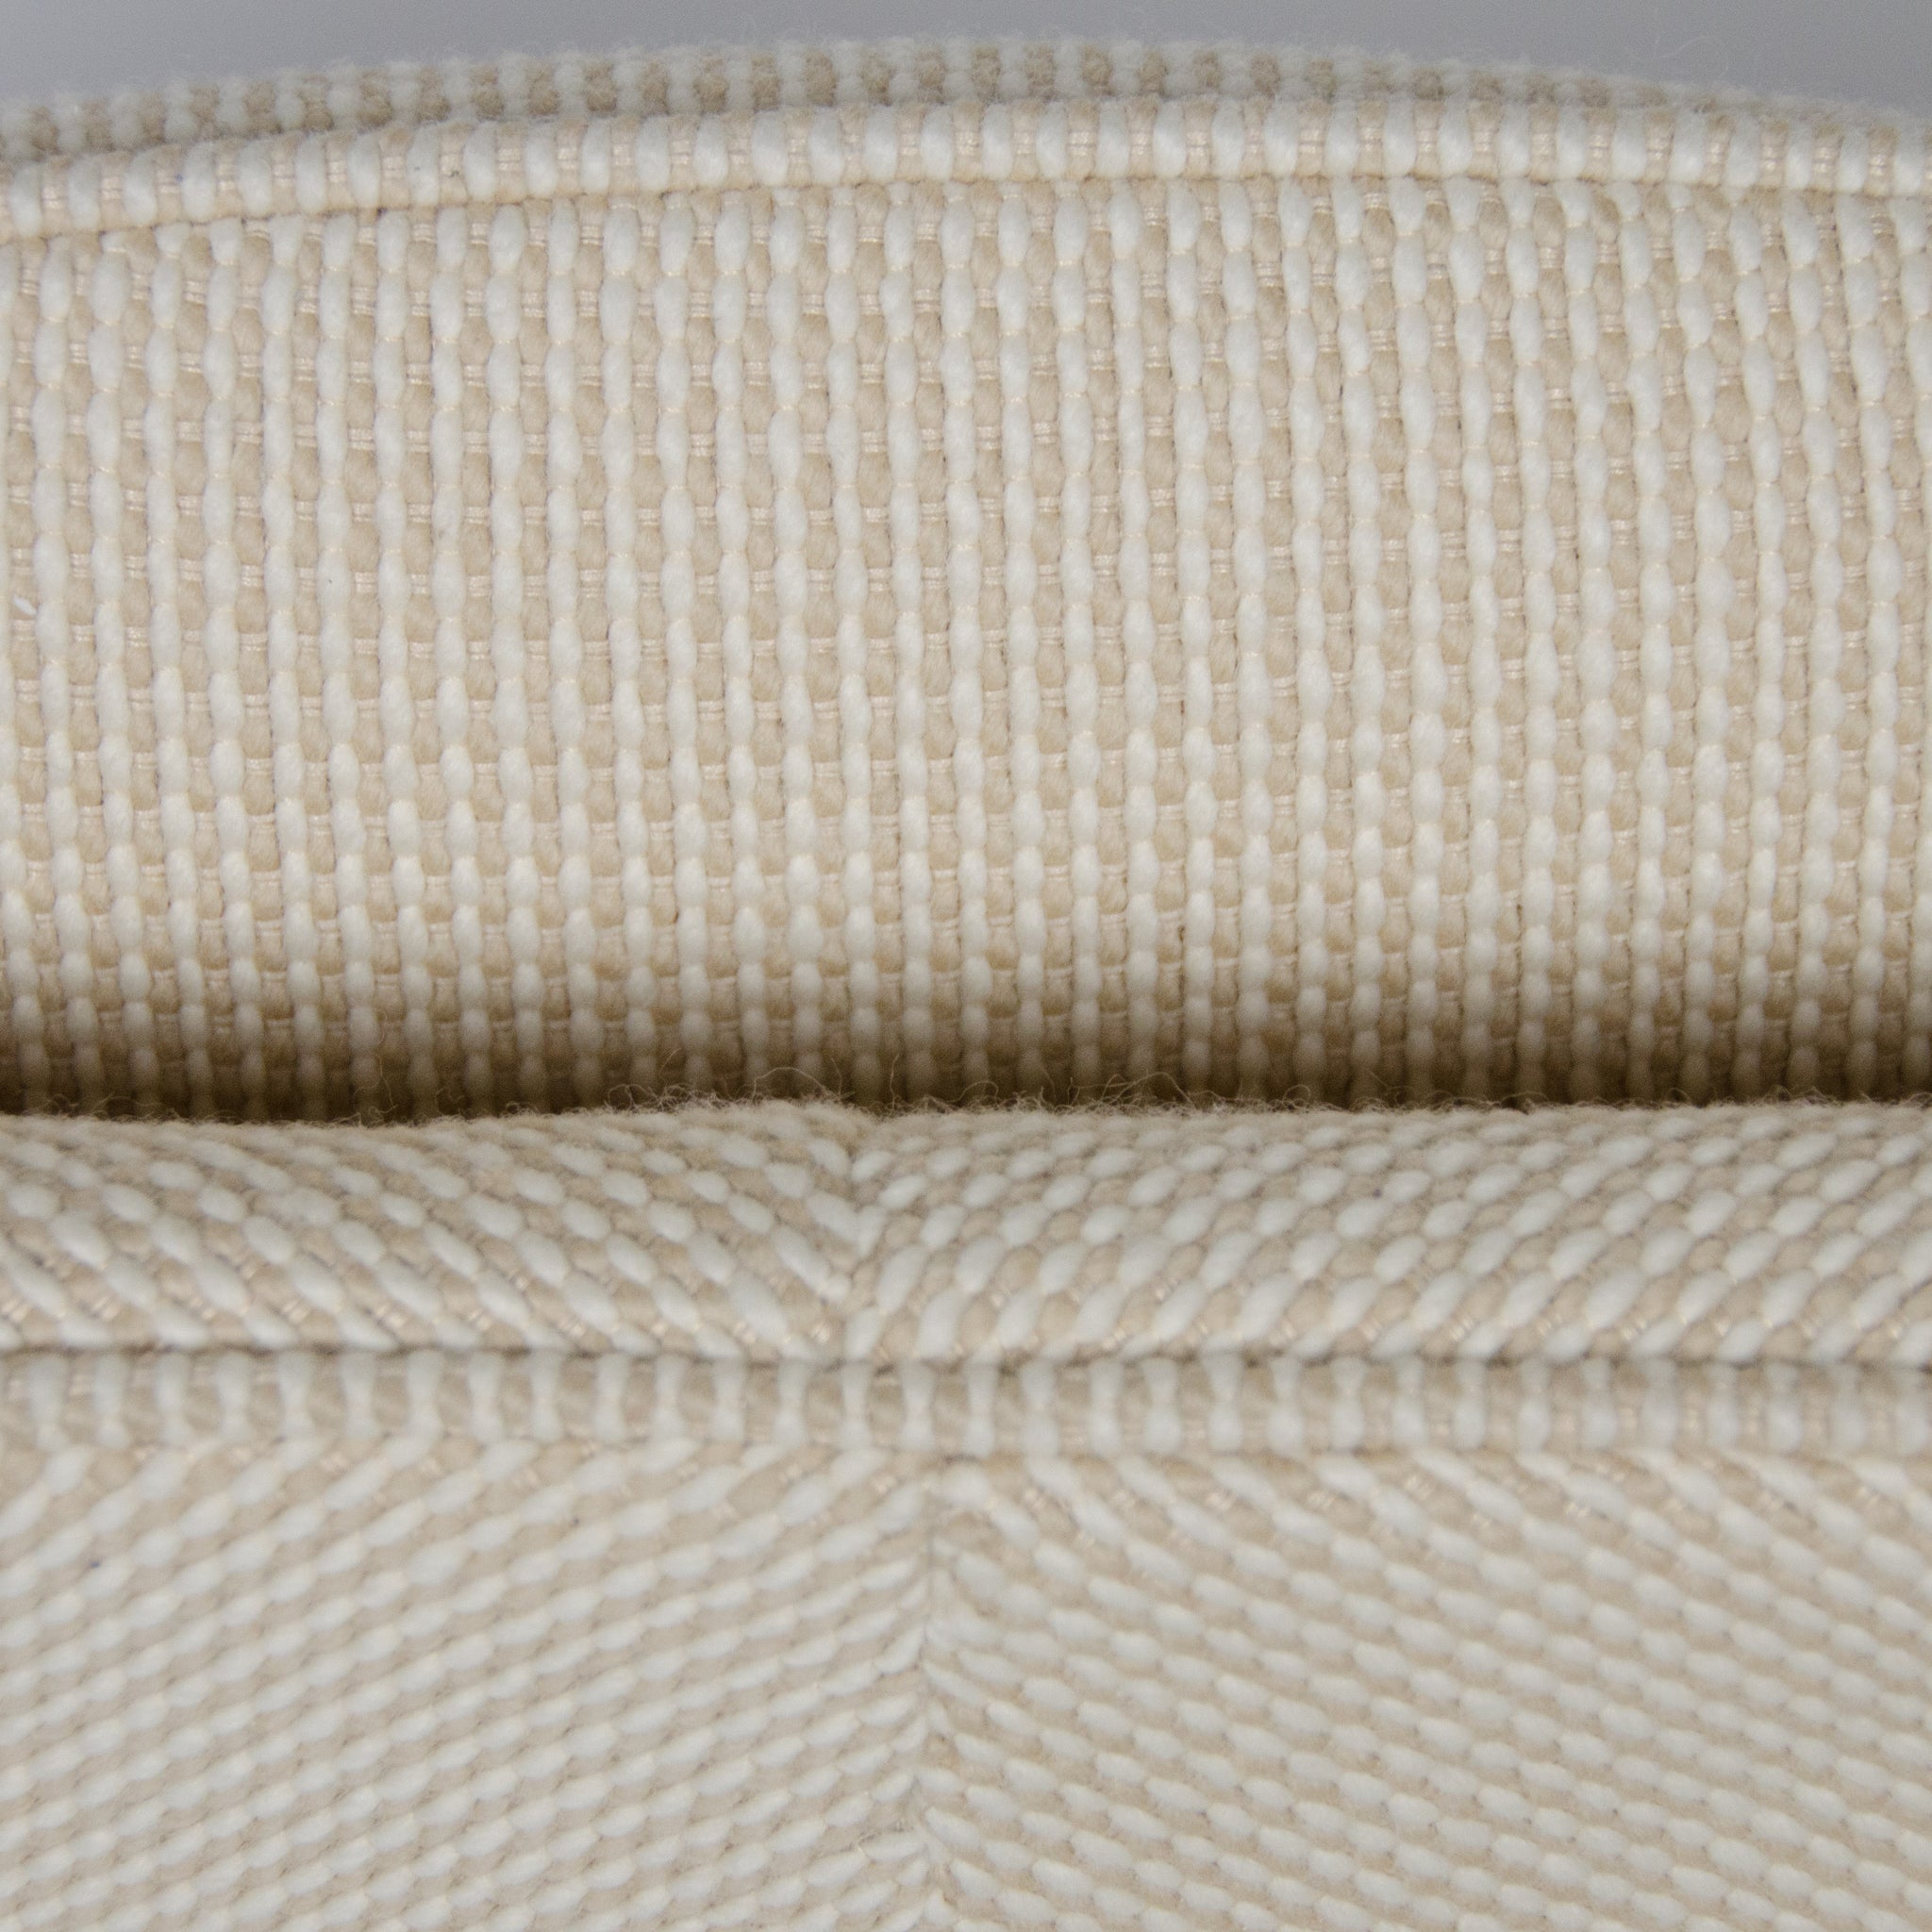 SOLD Eero Saarinen Womb Chair Knoll International Mid-Size Ivory Cato Fabric MINT!